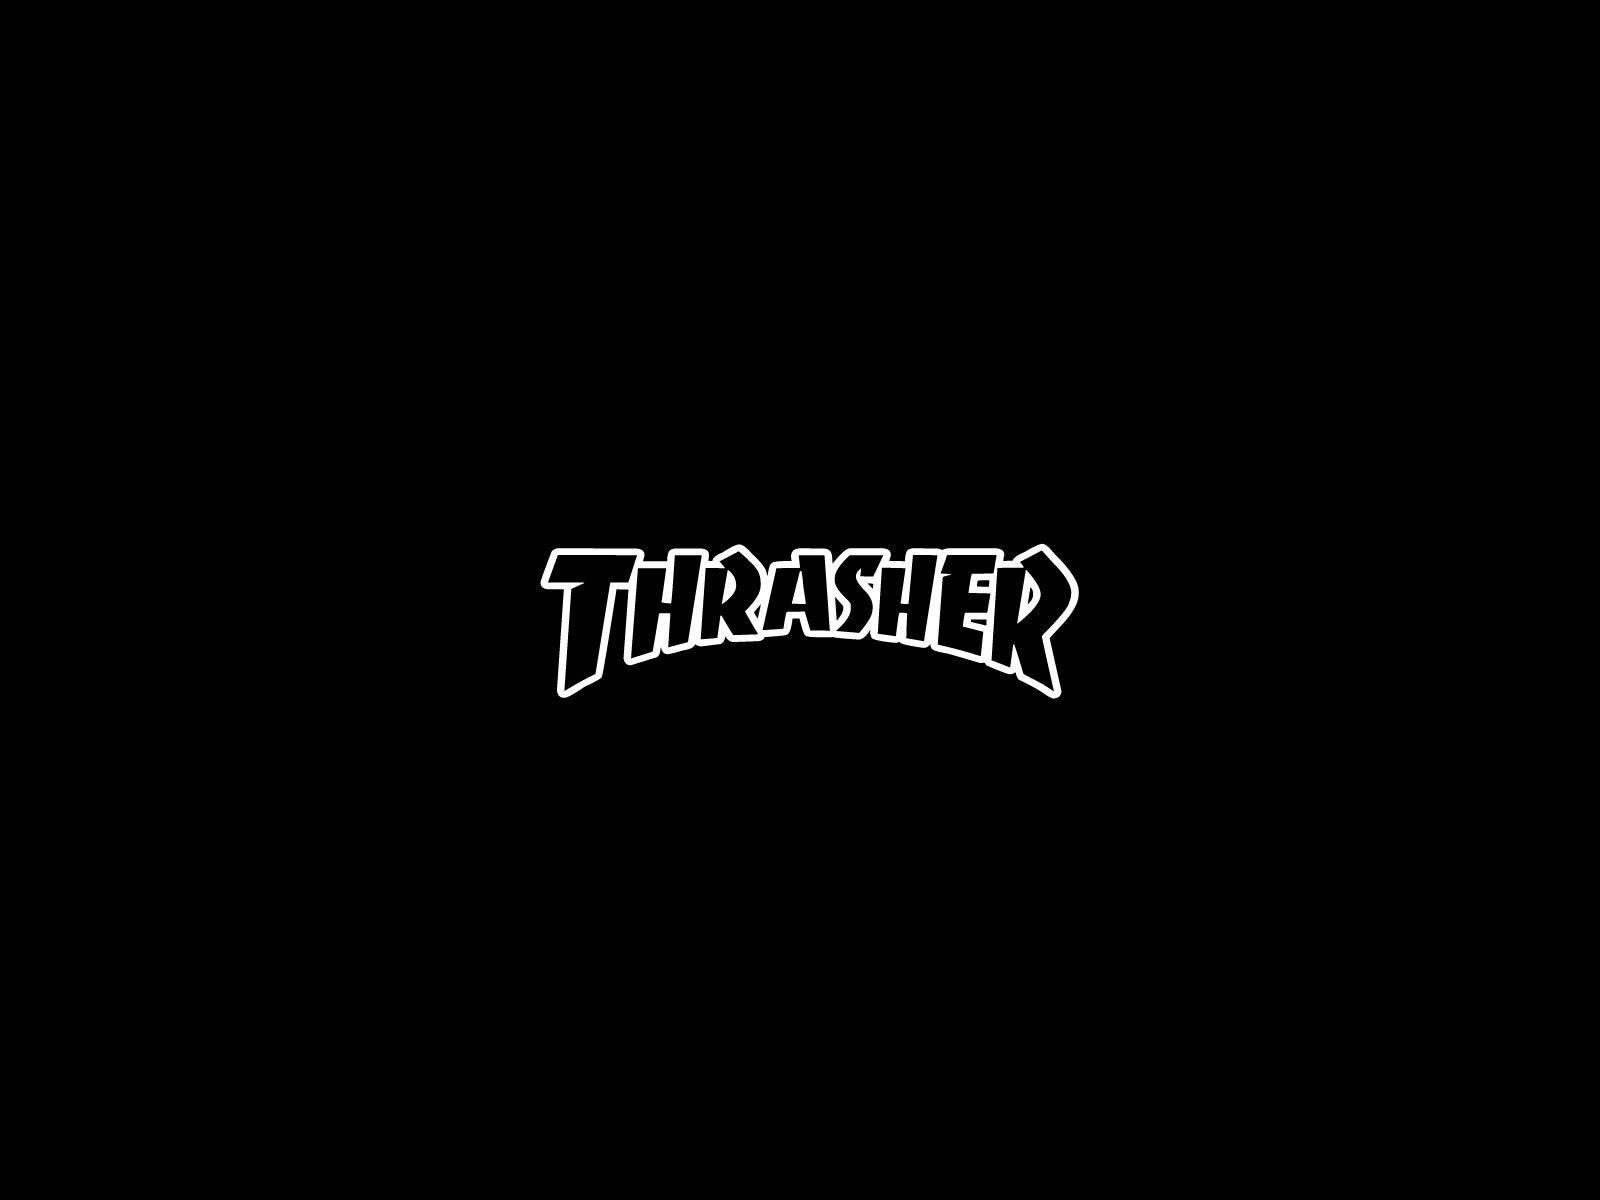 Thrasher Wallpaper Logo - thrasher logo wallpaper. Wallpaper, iPhone